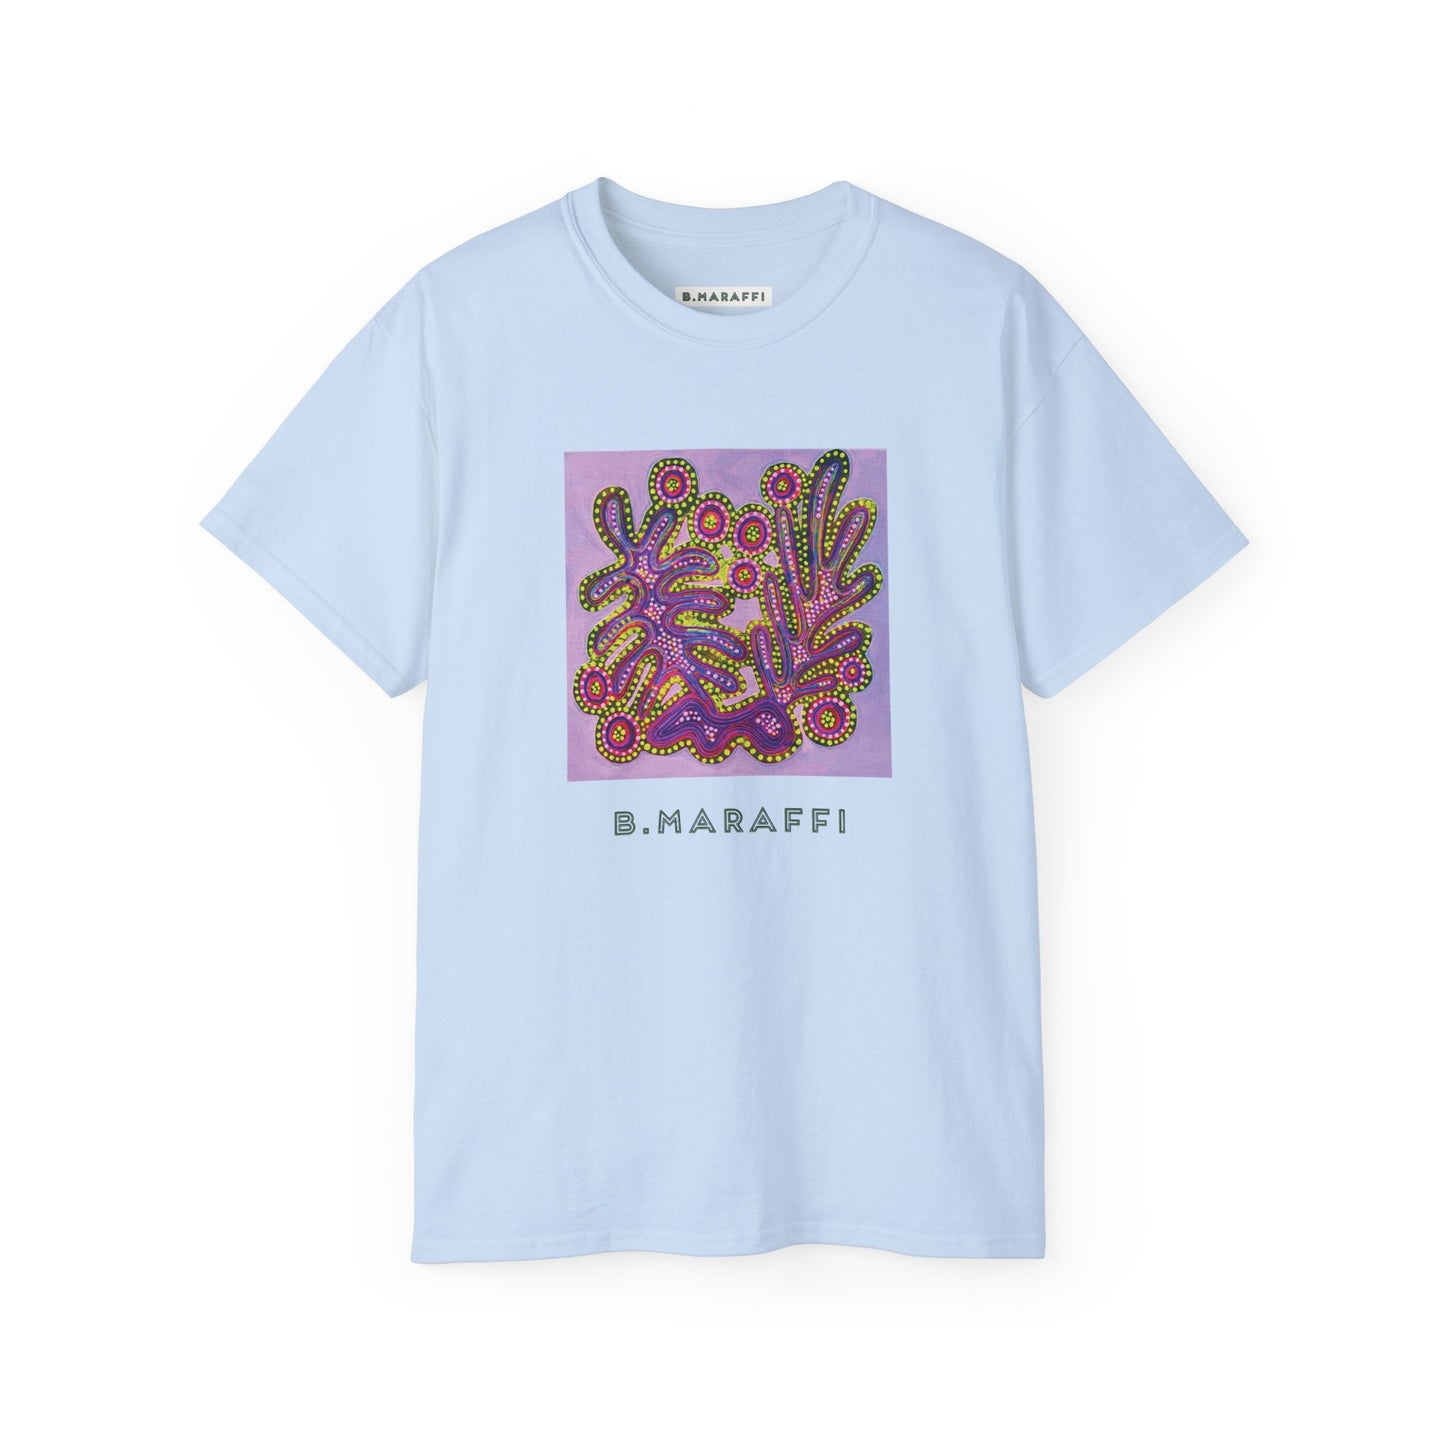 B.Maraffi Cotton T-shirt - Coral Reef